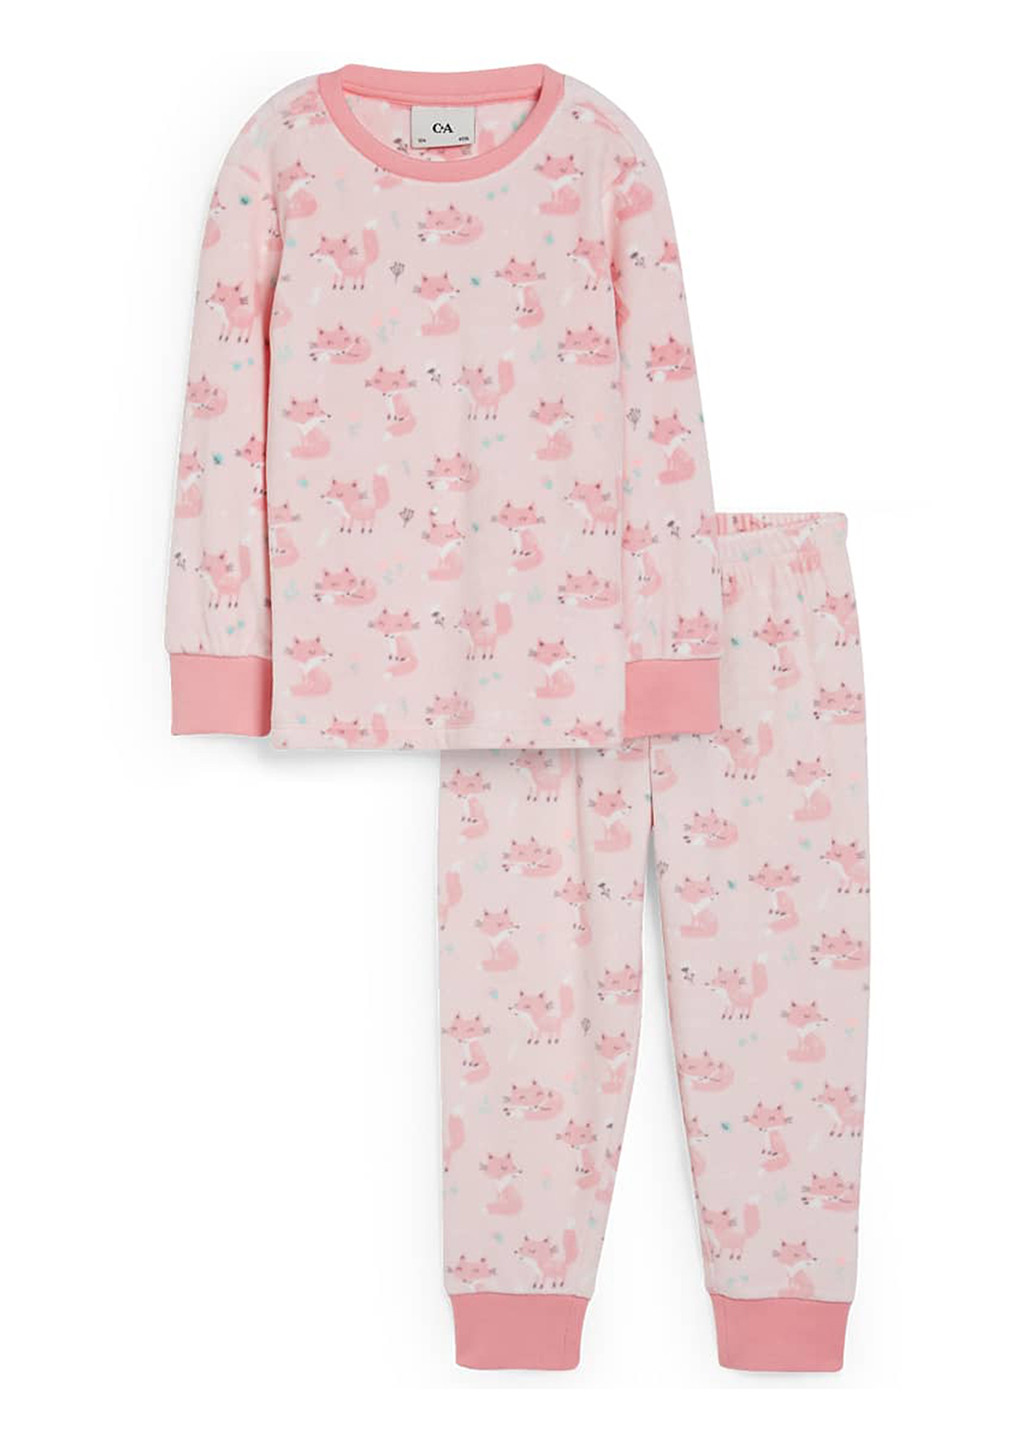 Светло-розовая всесезон пижама (свитшот, брюки) свитшот + брюки C&A